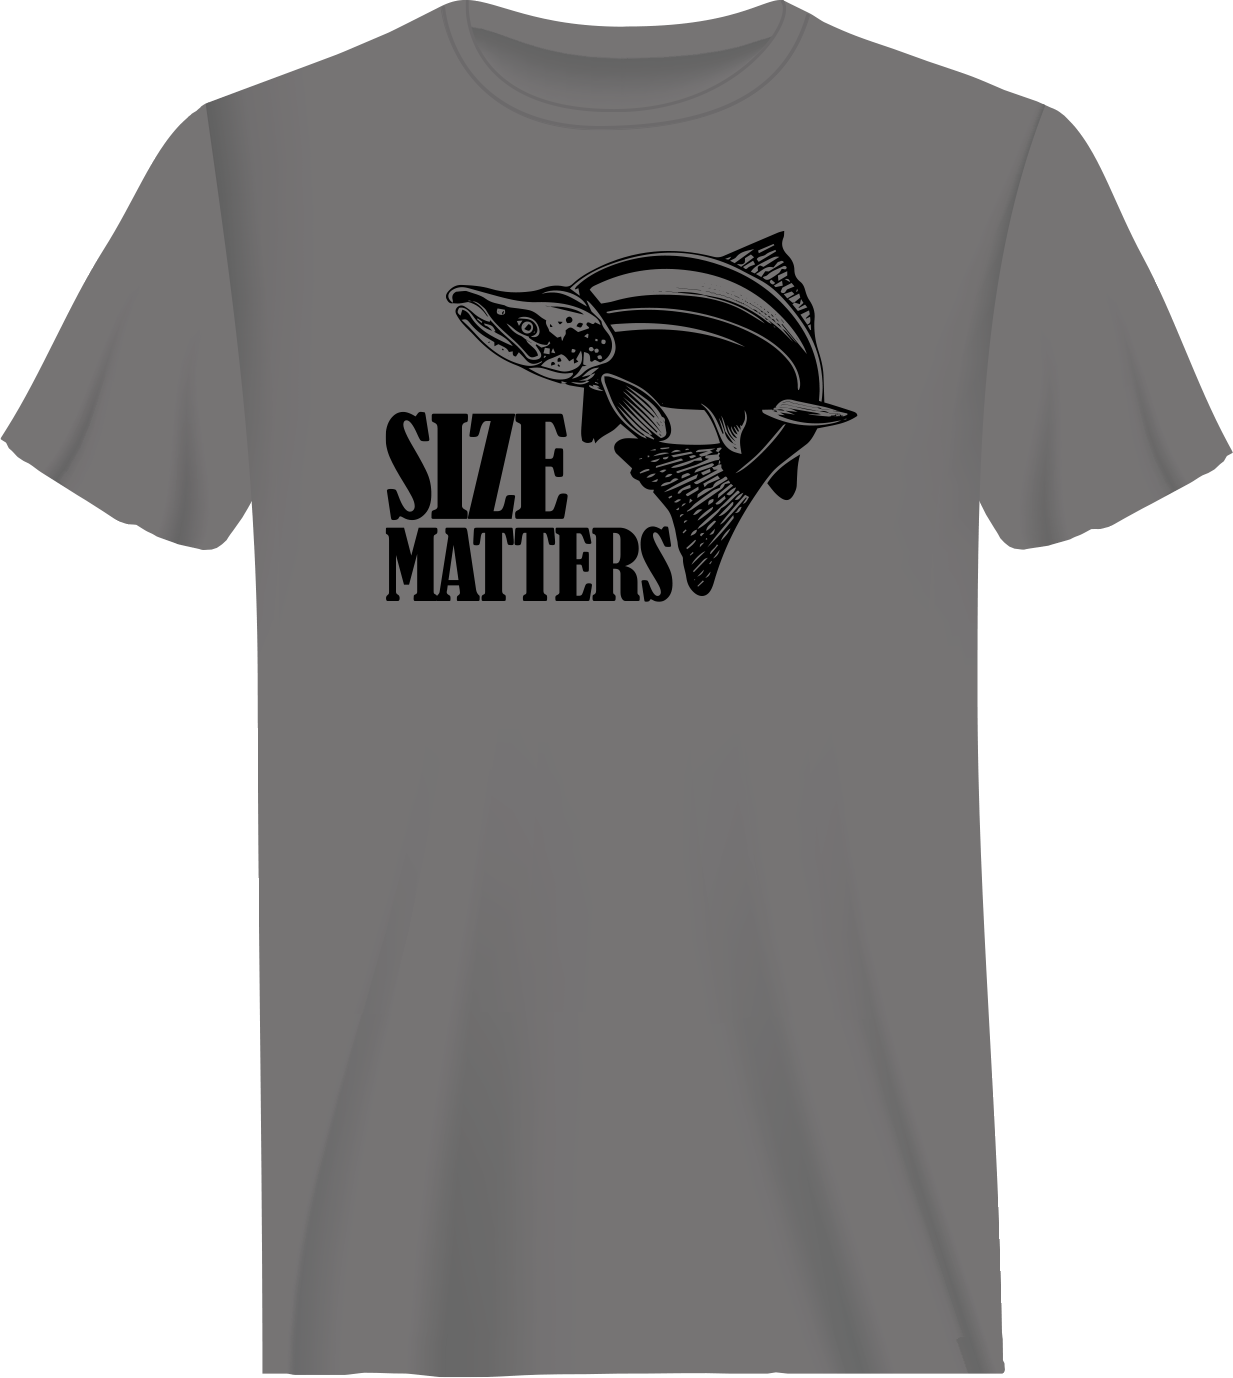 Size Matters T-Shirt for Men